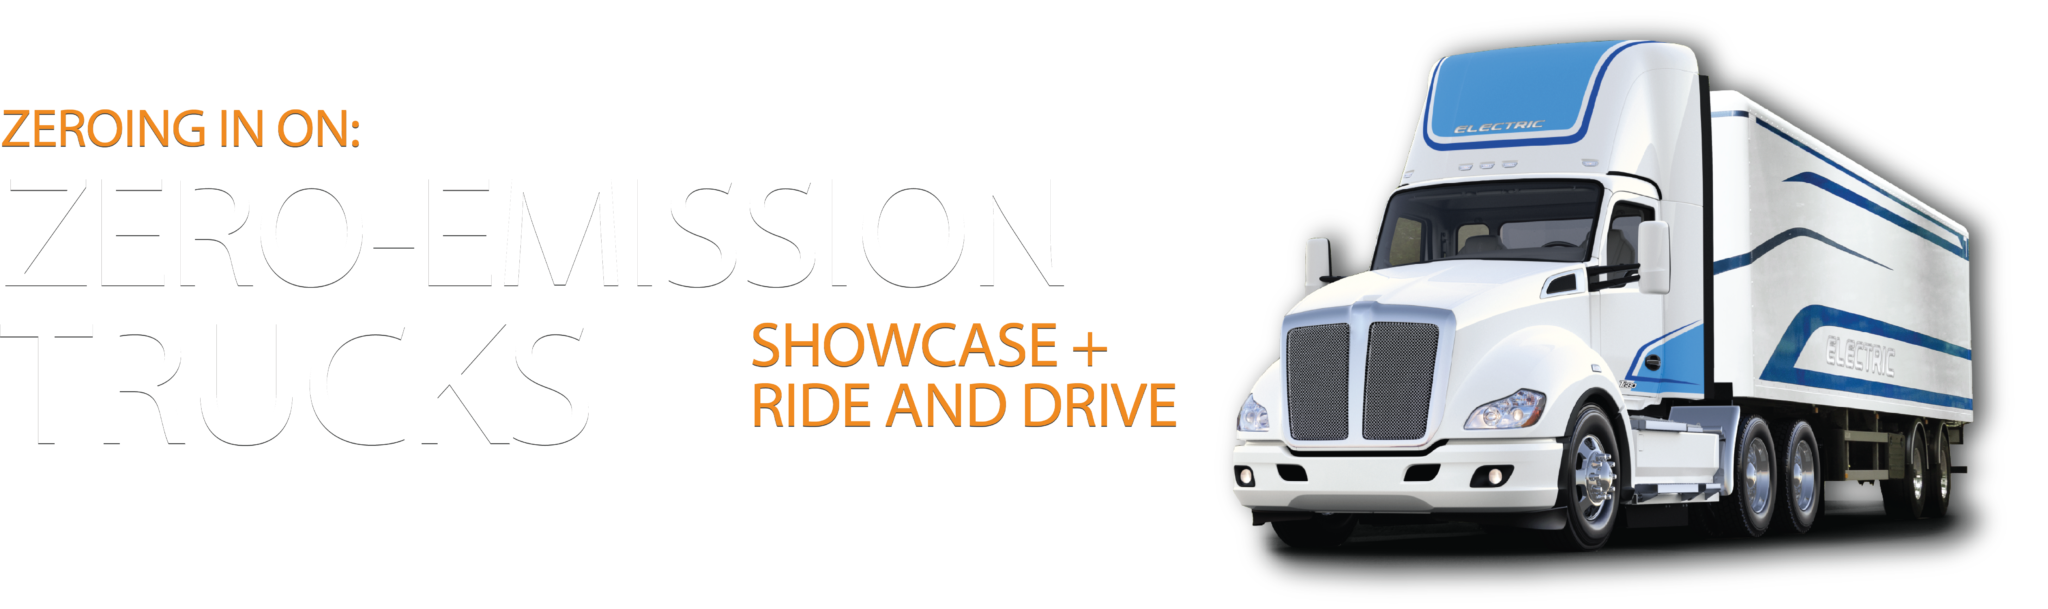 ZeroEmission Truck Showcase + Ride and Drive Atlas EV Hub